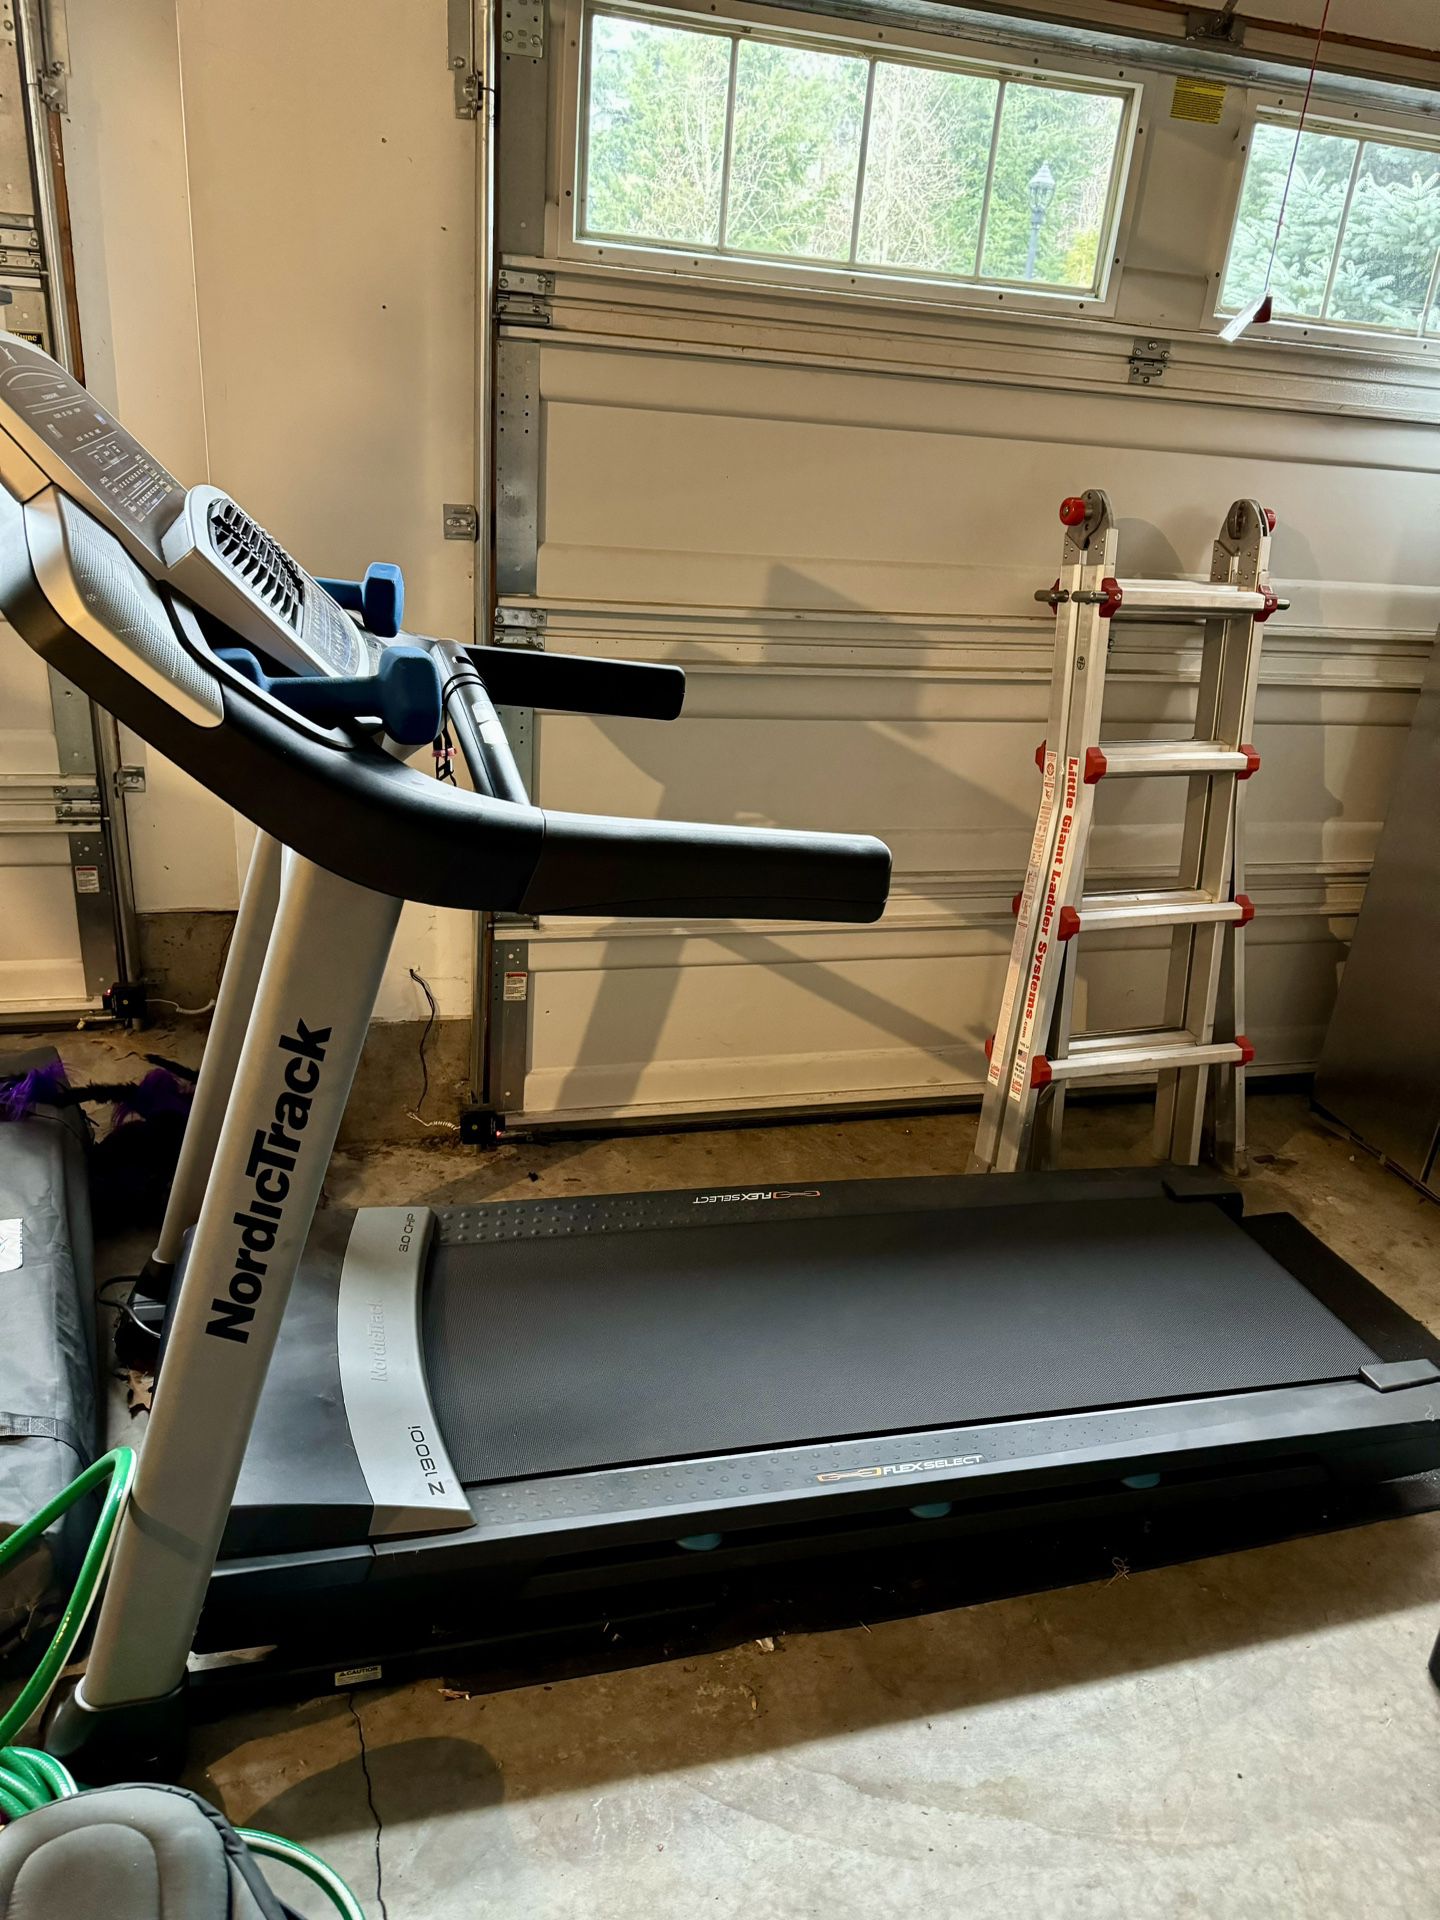 NordicTrack Z1300i Treadmill